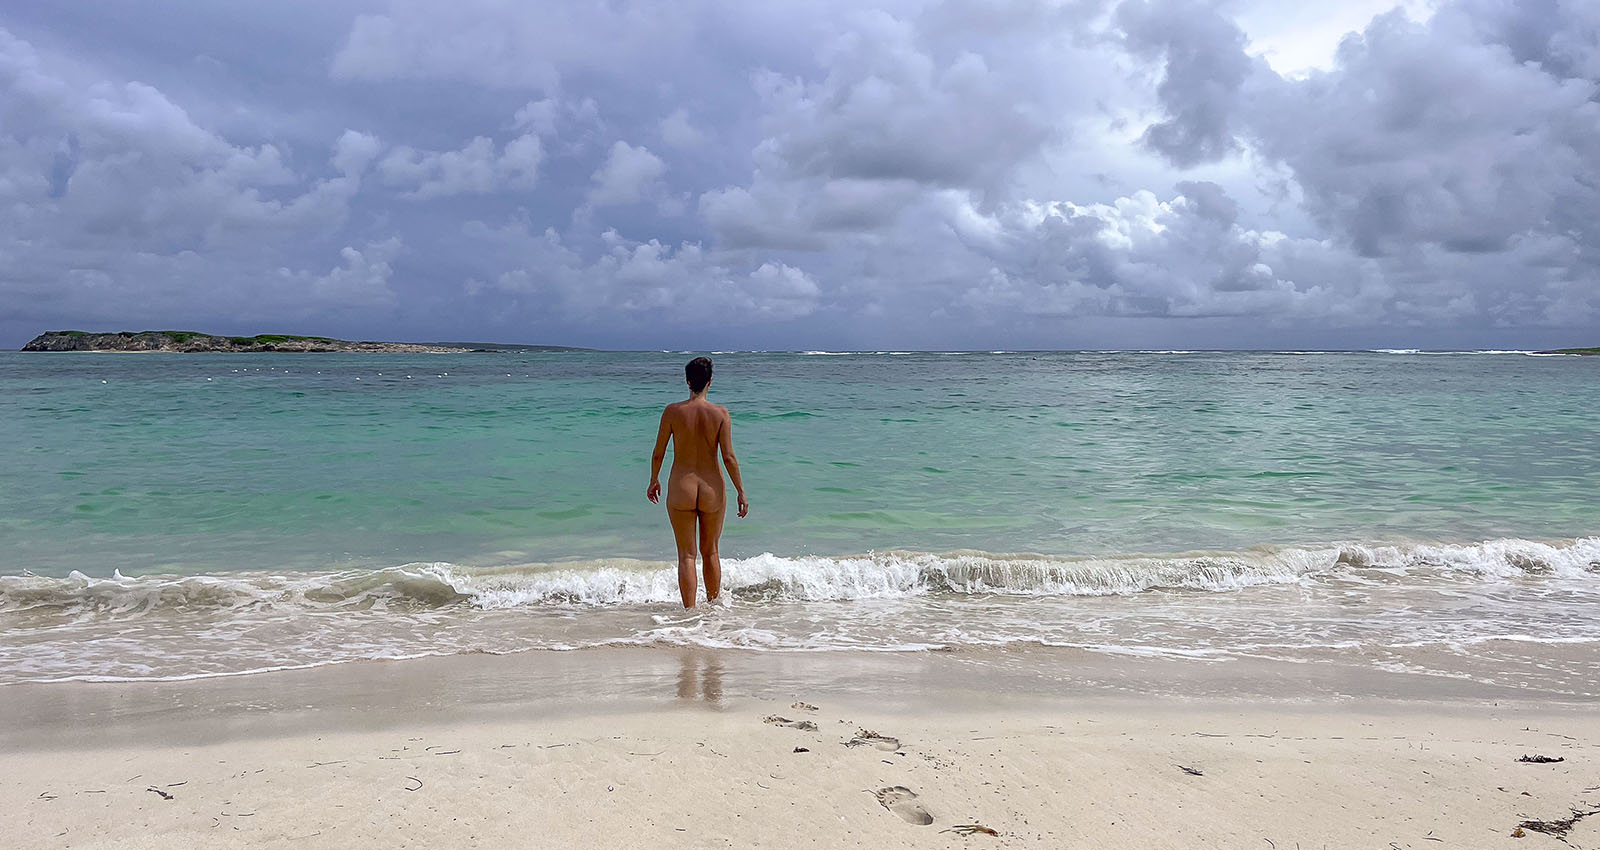 The nude beaches of Saint Martin